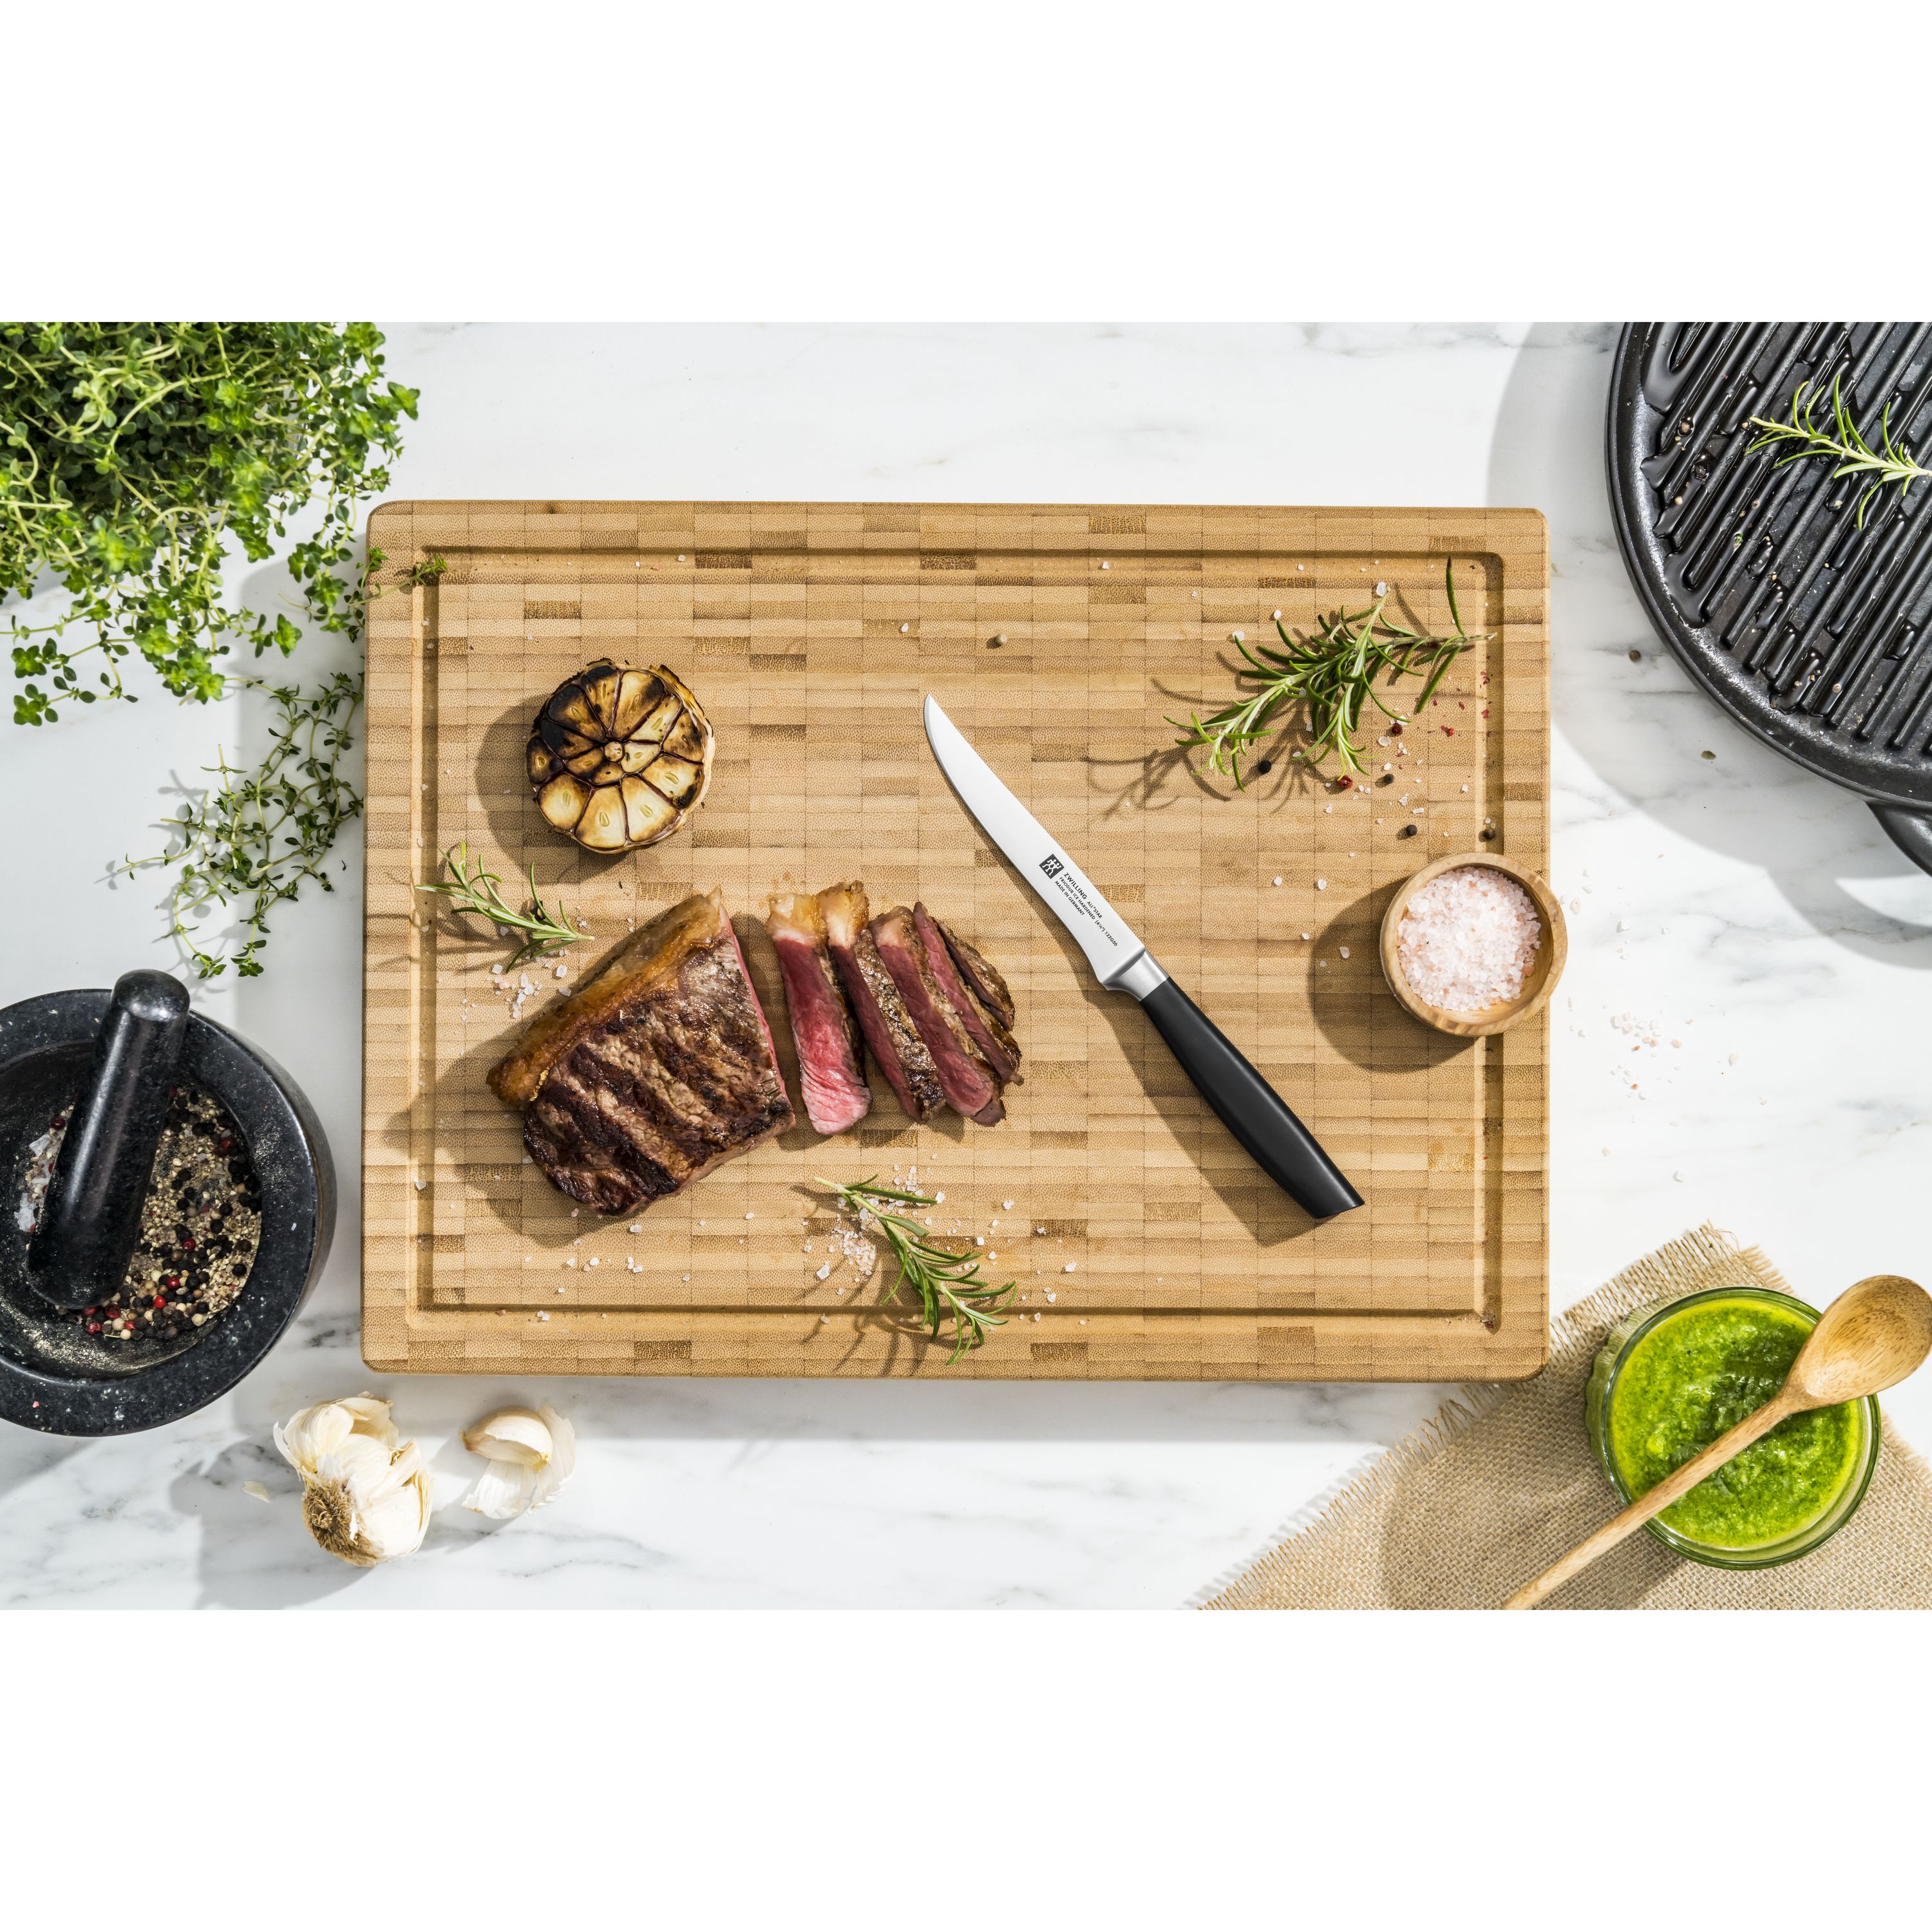 Zwilling Gourmet 4.5-Inch Steak Knife